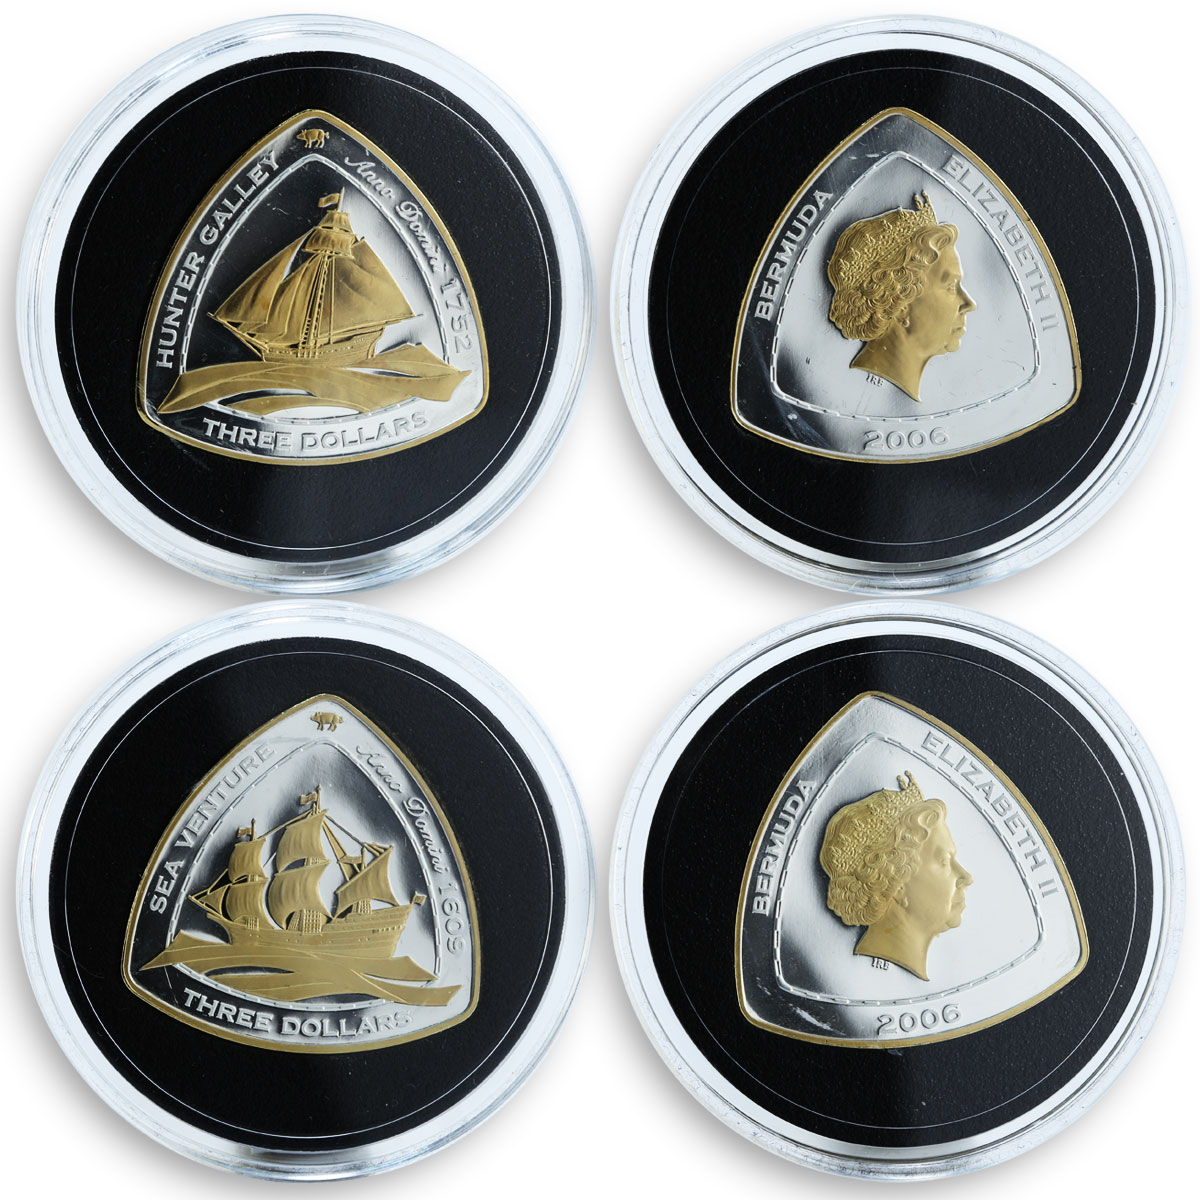 Bermuda $3 Shipwrecks Set of 6 Triangular Silver Proof Gilded coins 2006